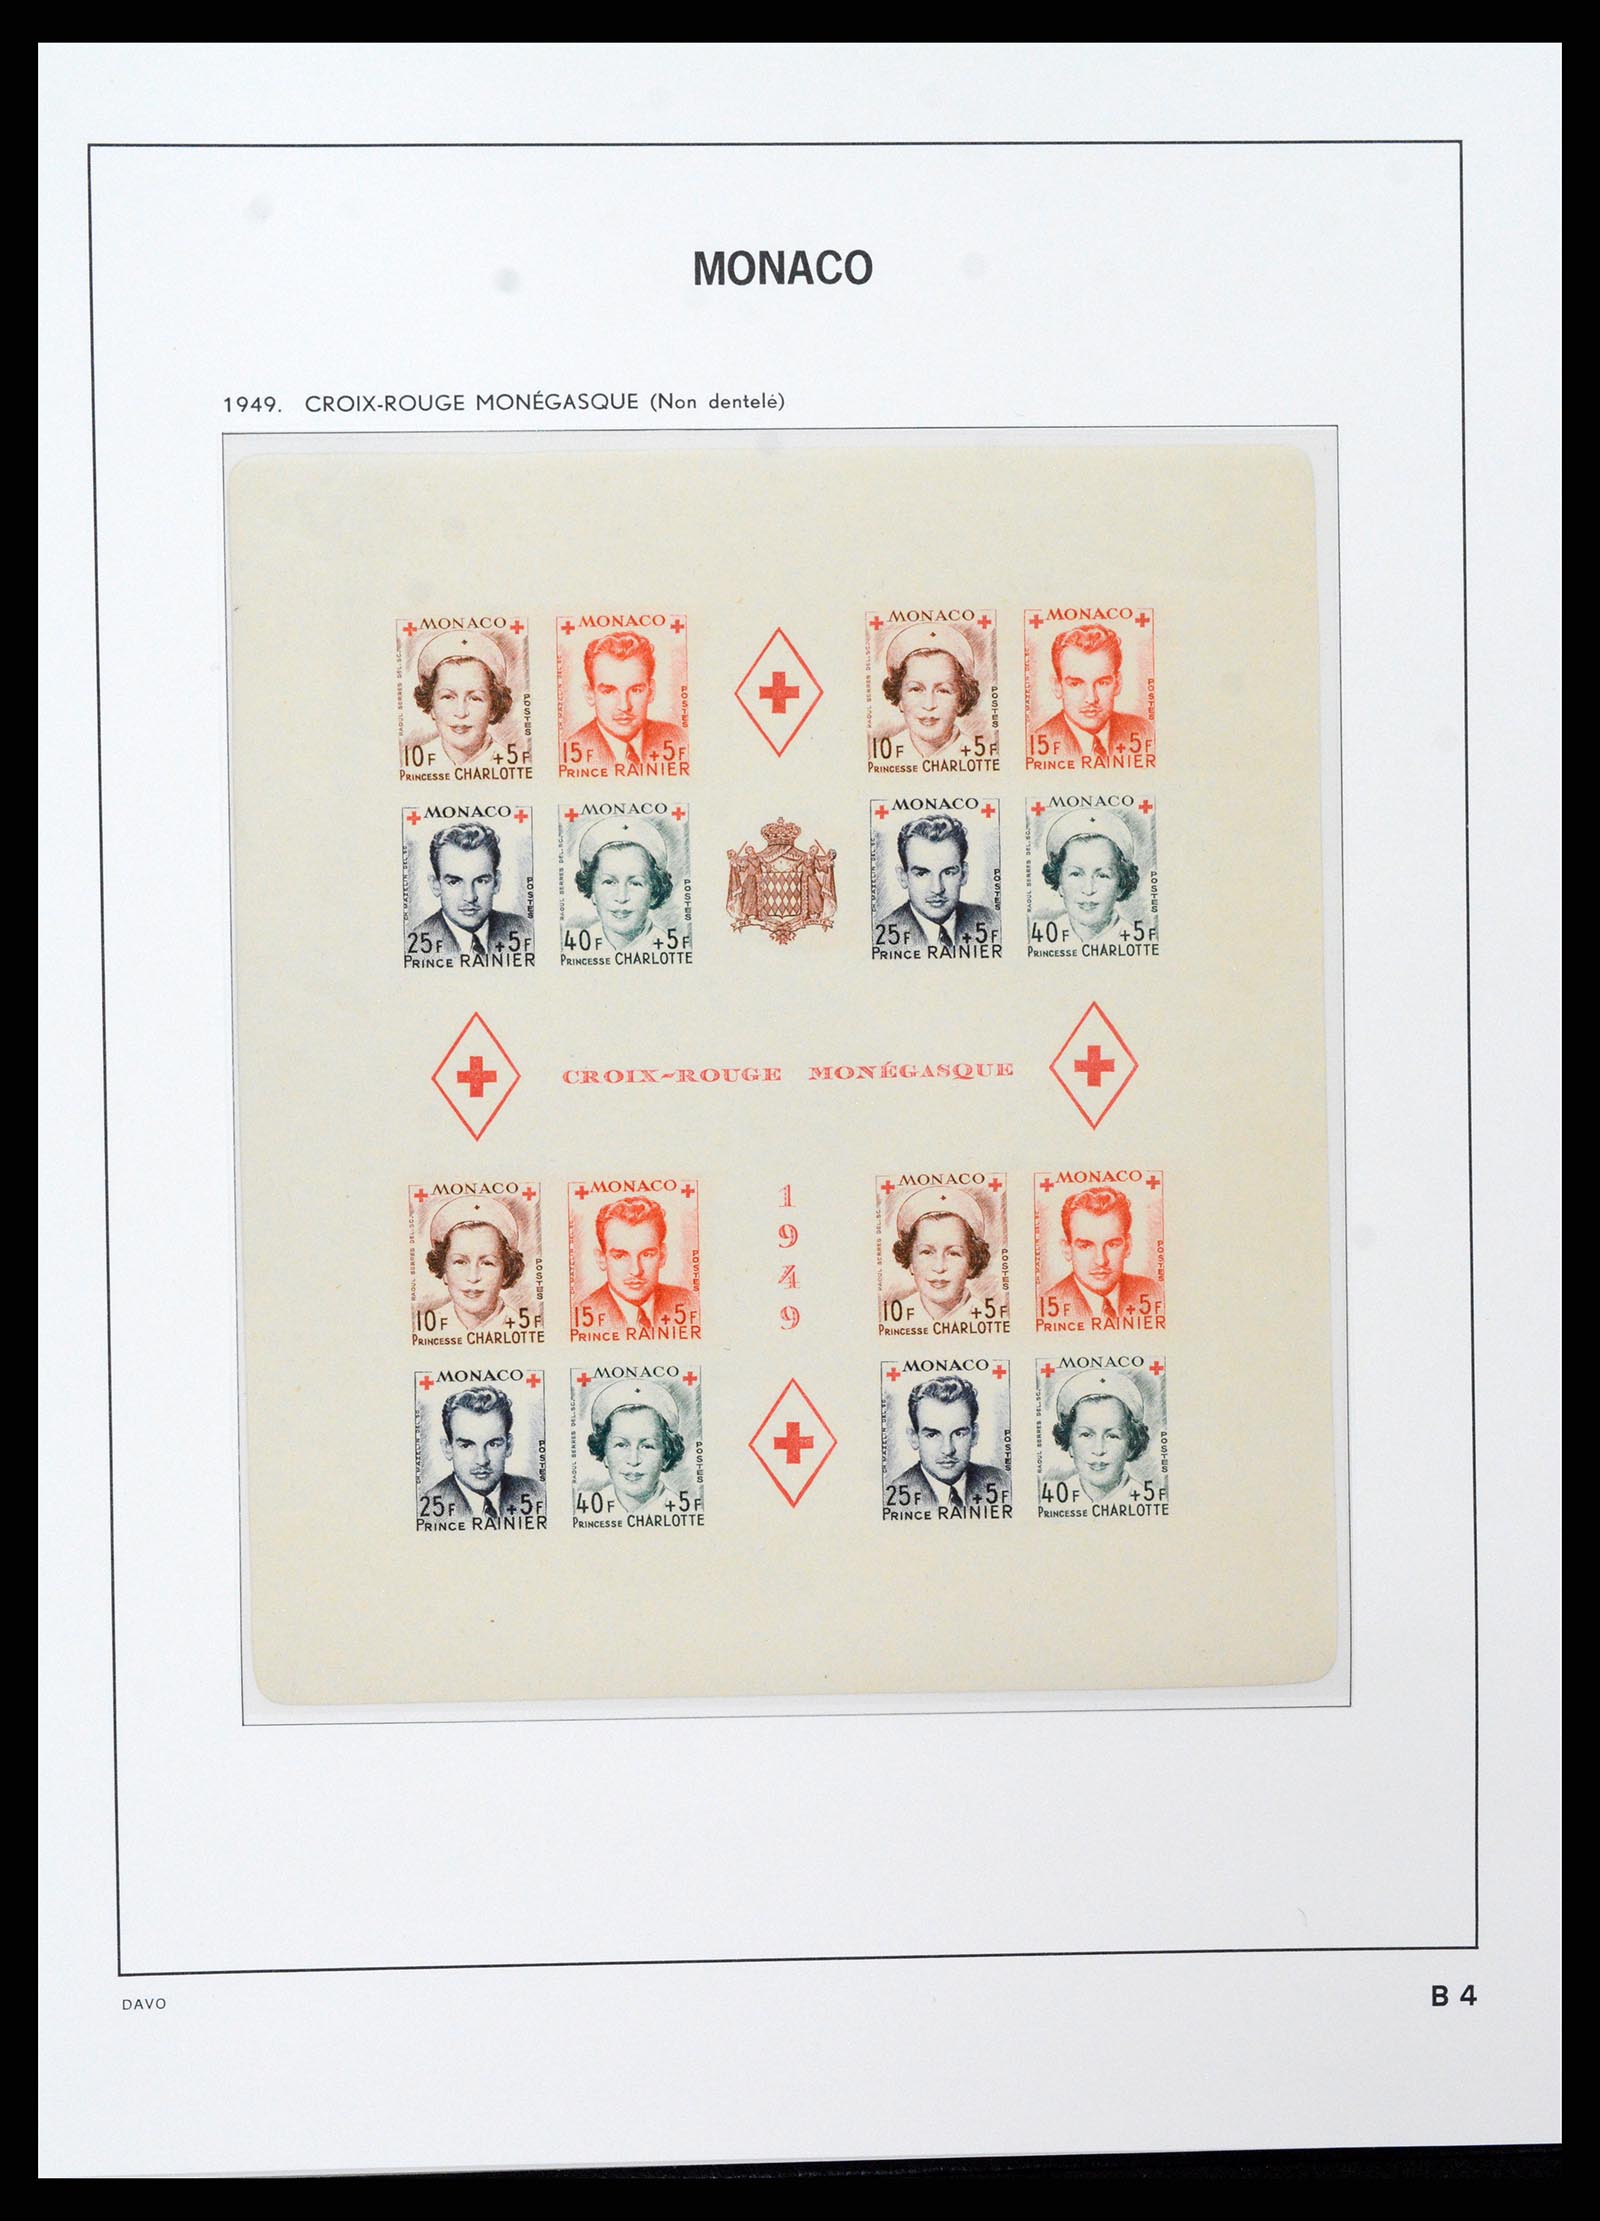 37279 070 - Stamp collection 37279 Monaco 1885-1969.